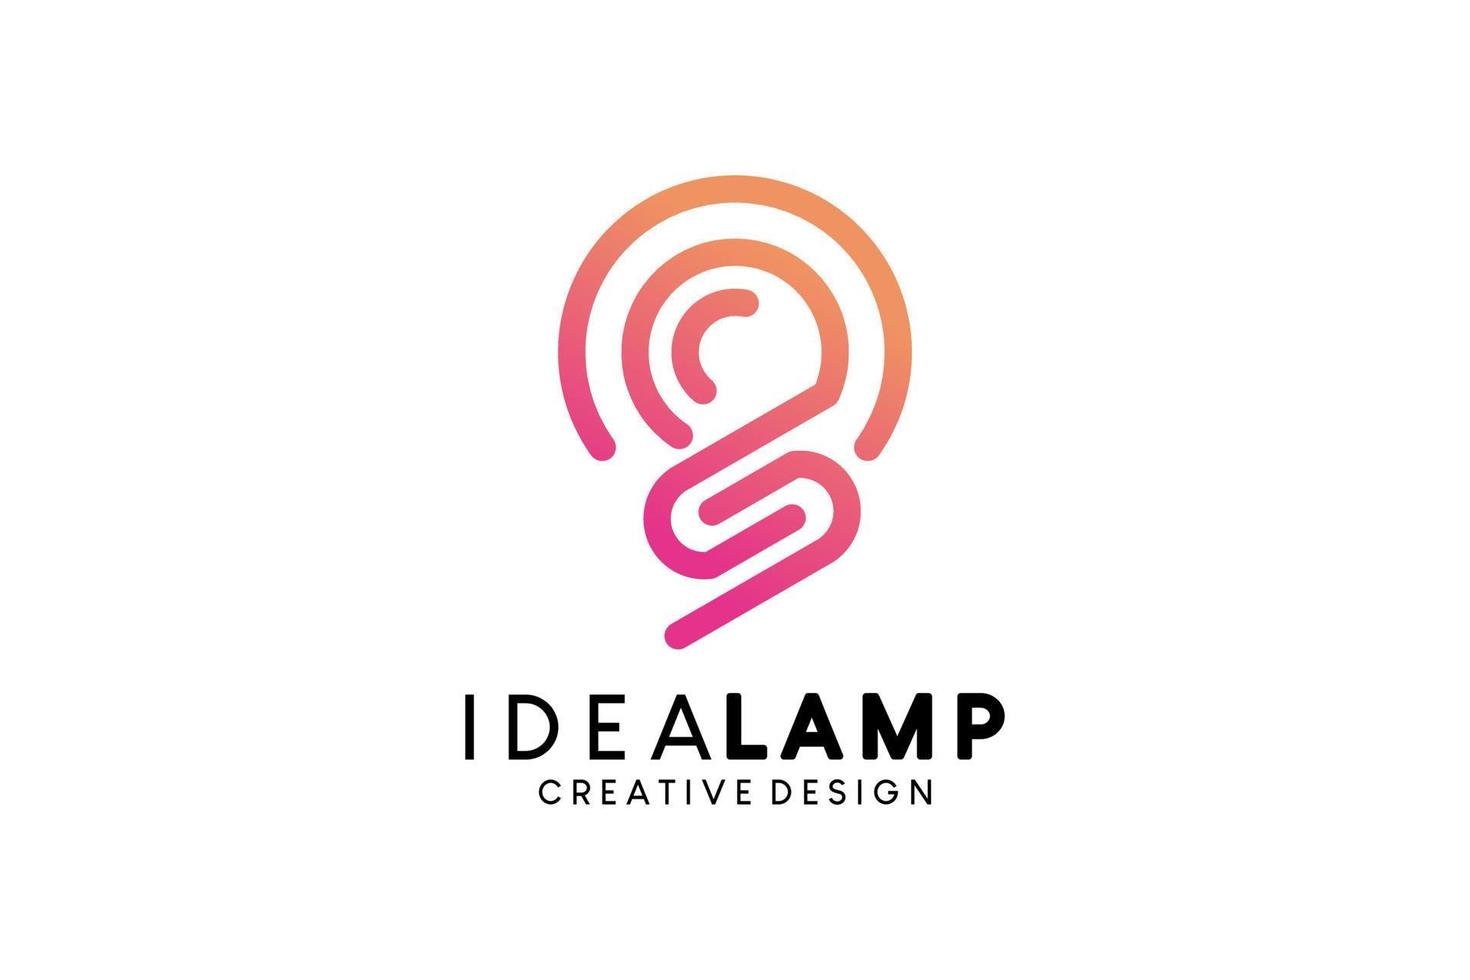 Idea lamp icon logo design with creative line art vector